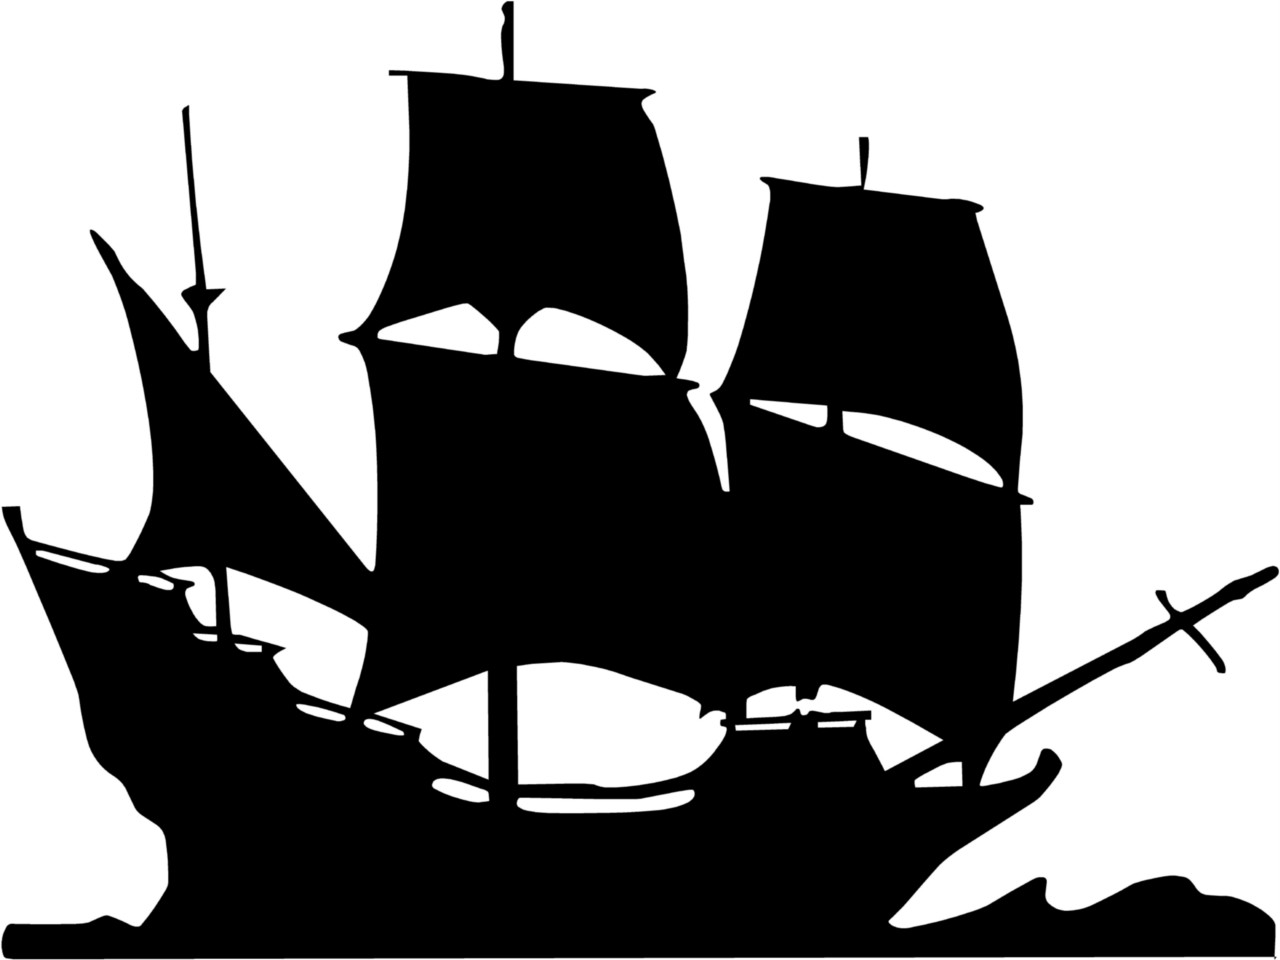 Pirate ship clipart.